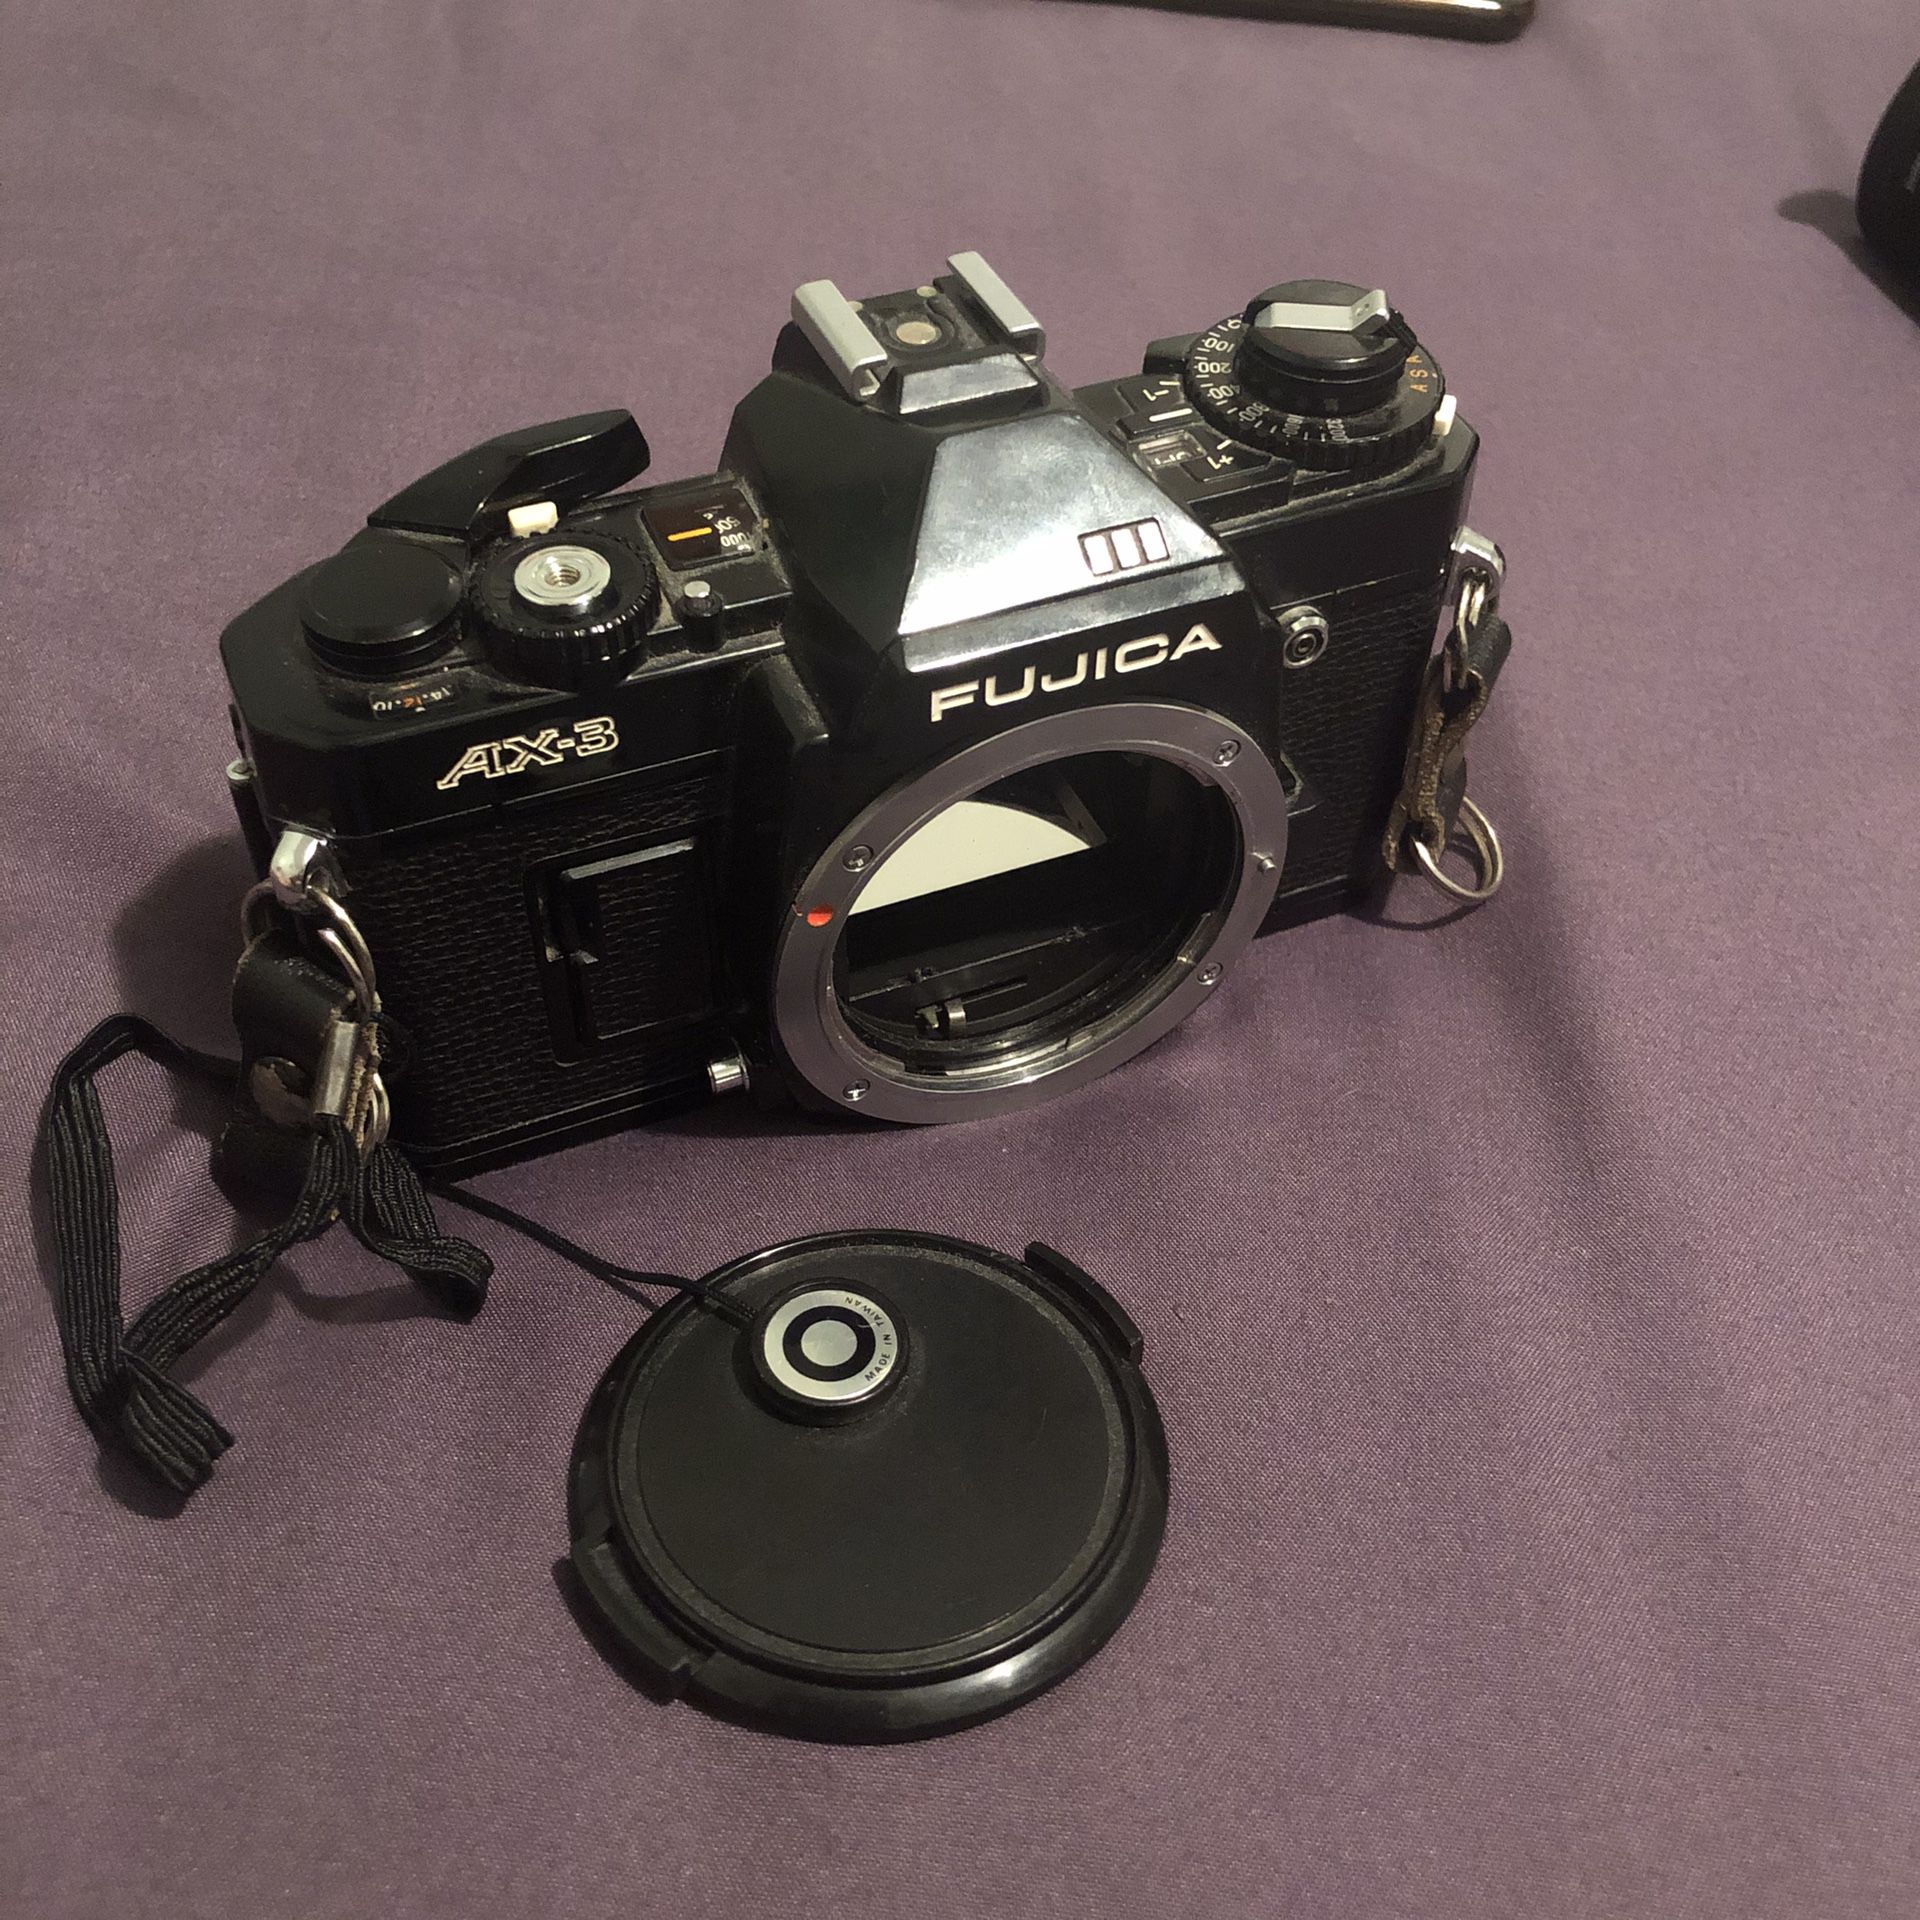 fujica ax-3 film camera (body only)